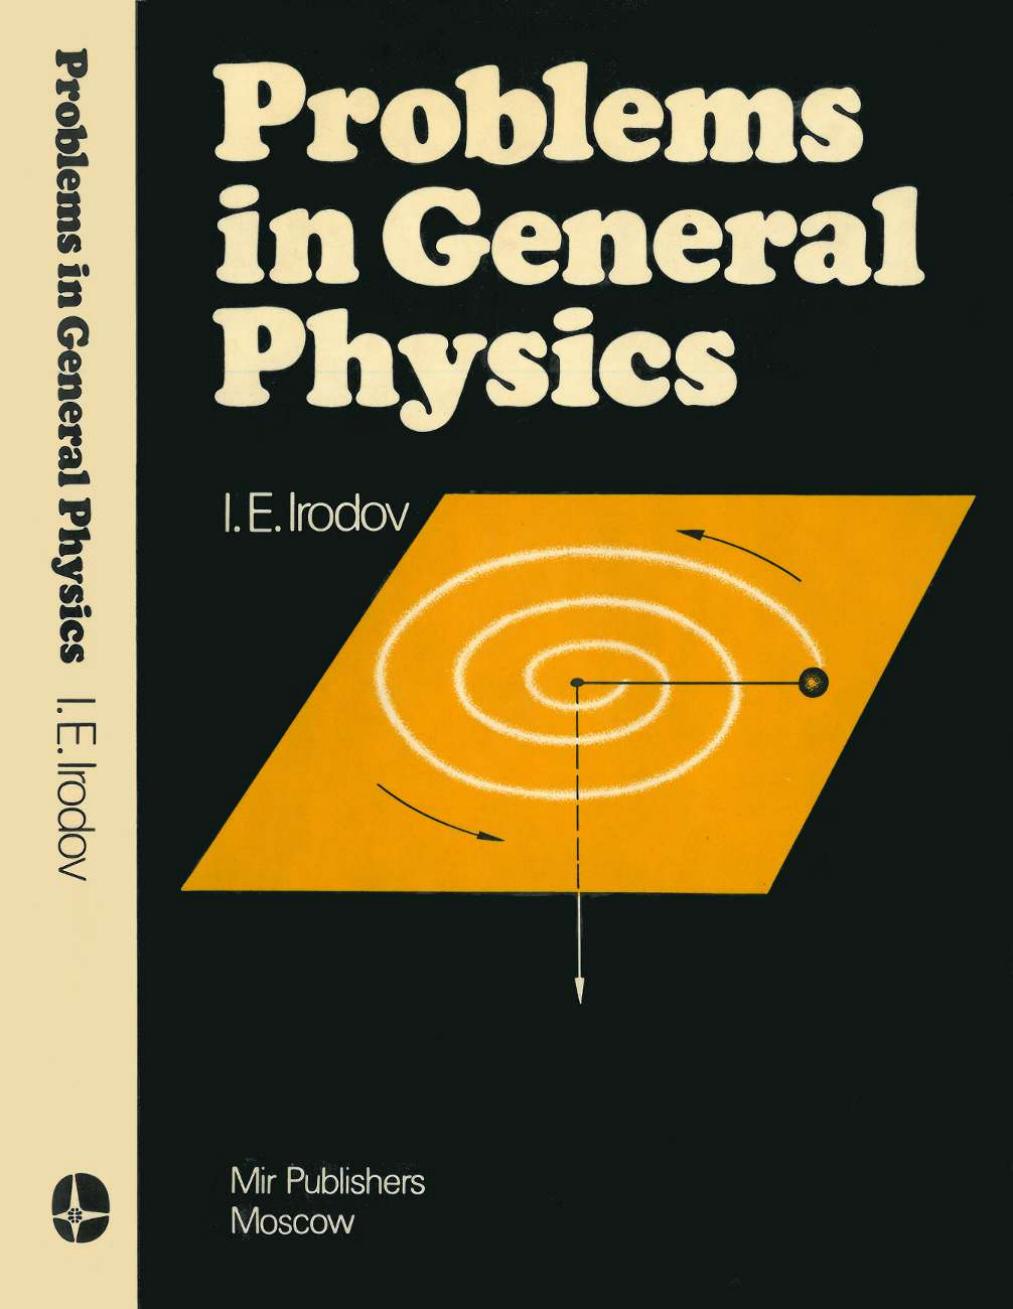 irodov-problems in general physics 1979,1981